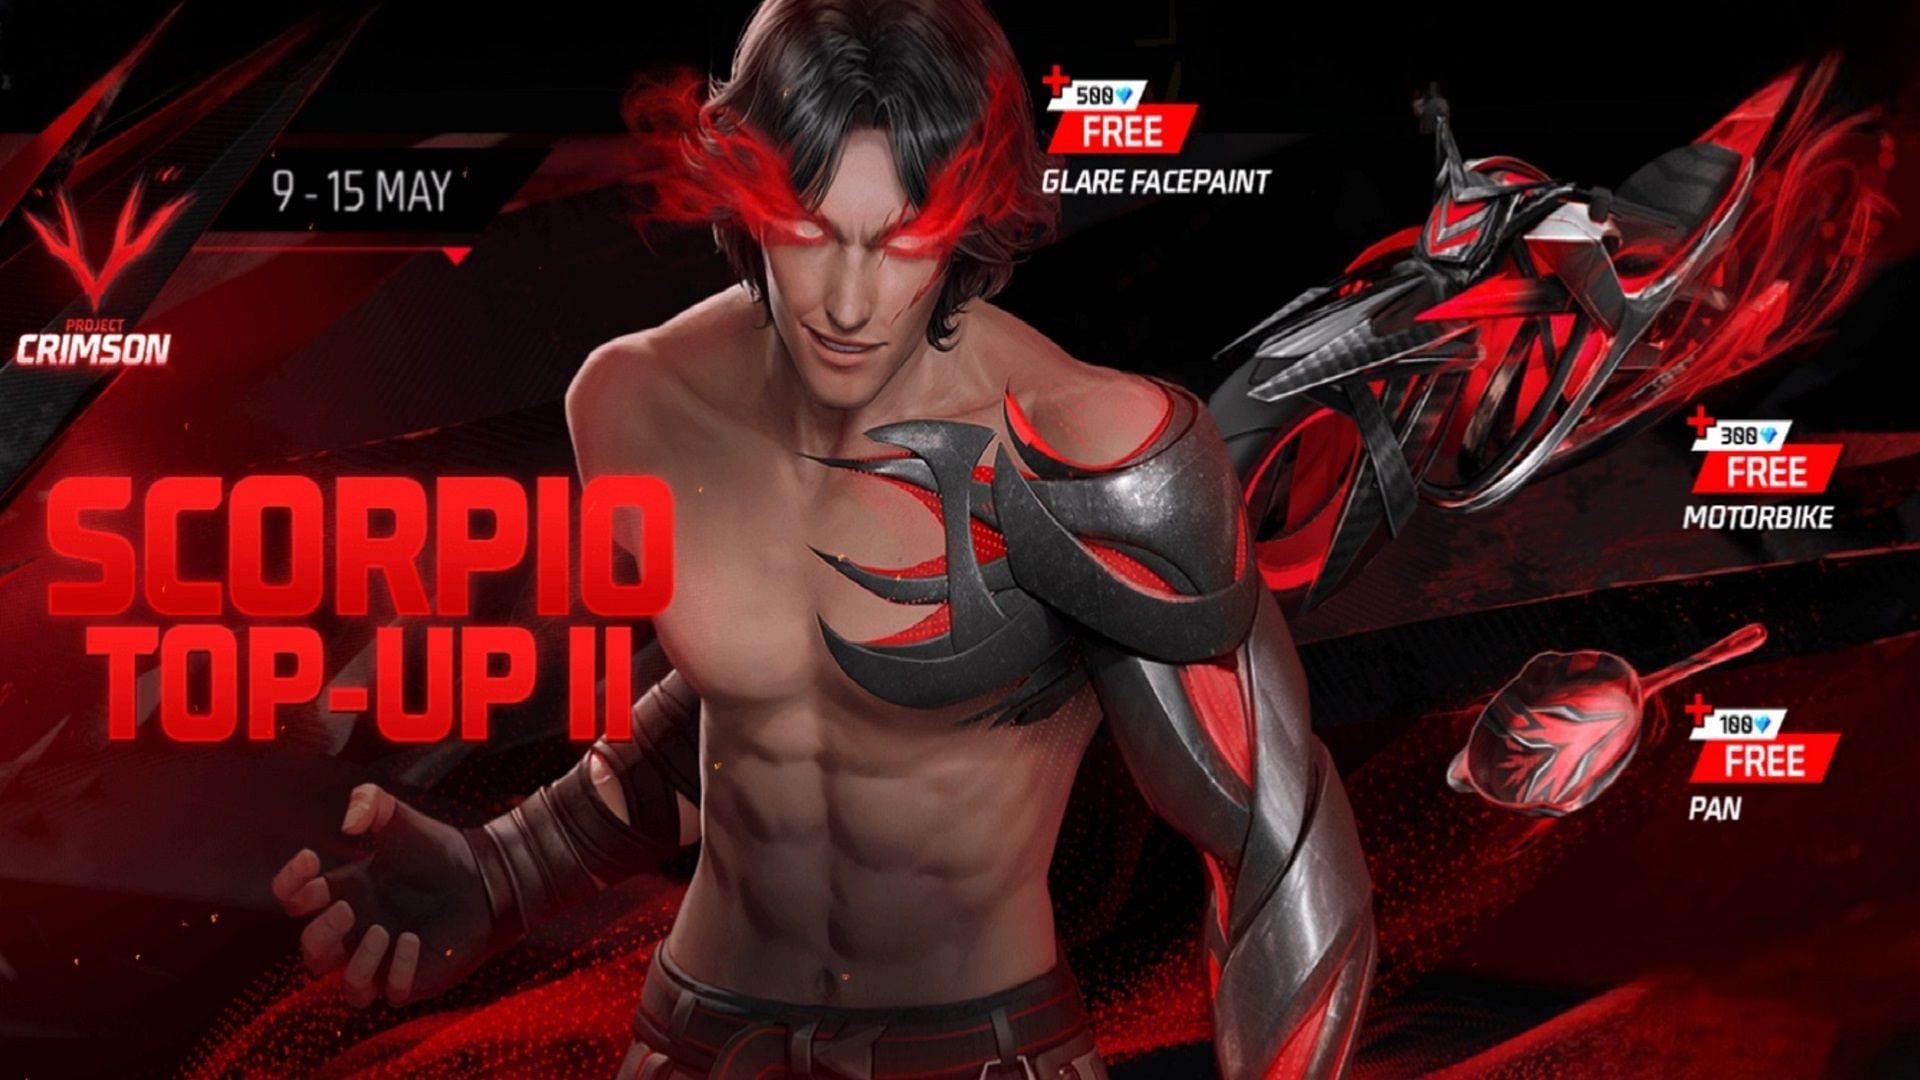 New Scorpio Top-Up 2 event starts in Free Fire MAX (Image via Garena)